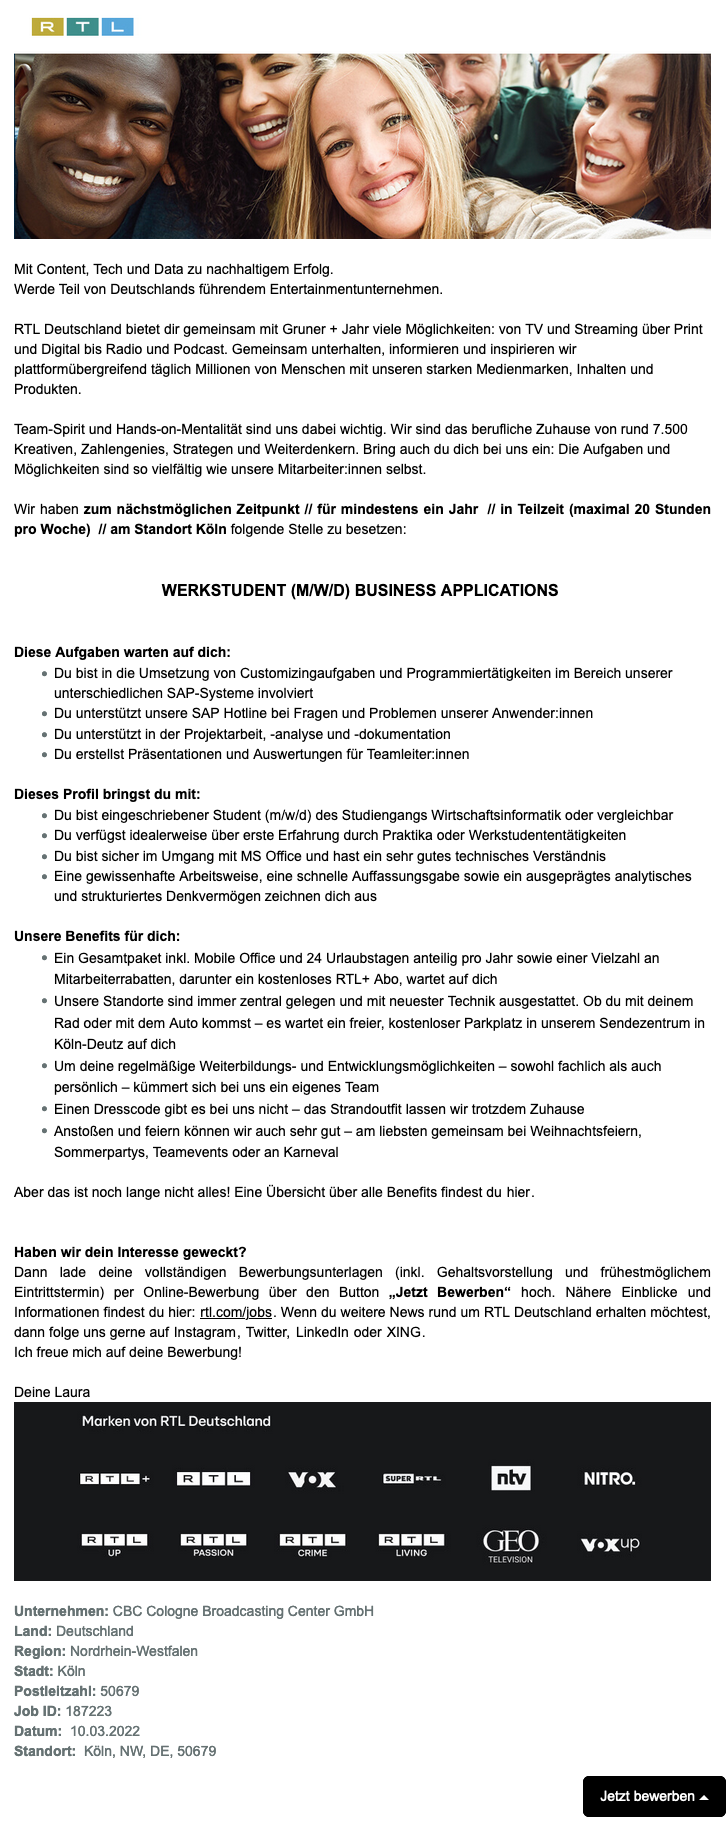 Werkstudent (m/w/d) Business Applications (CBC)